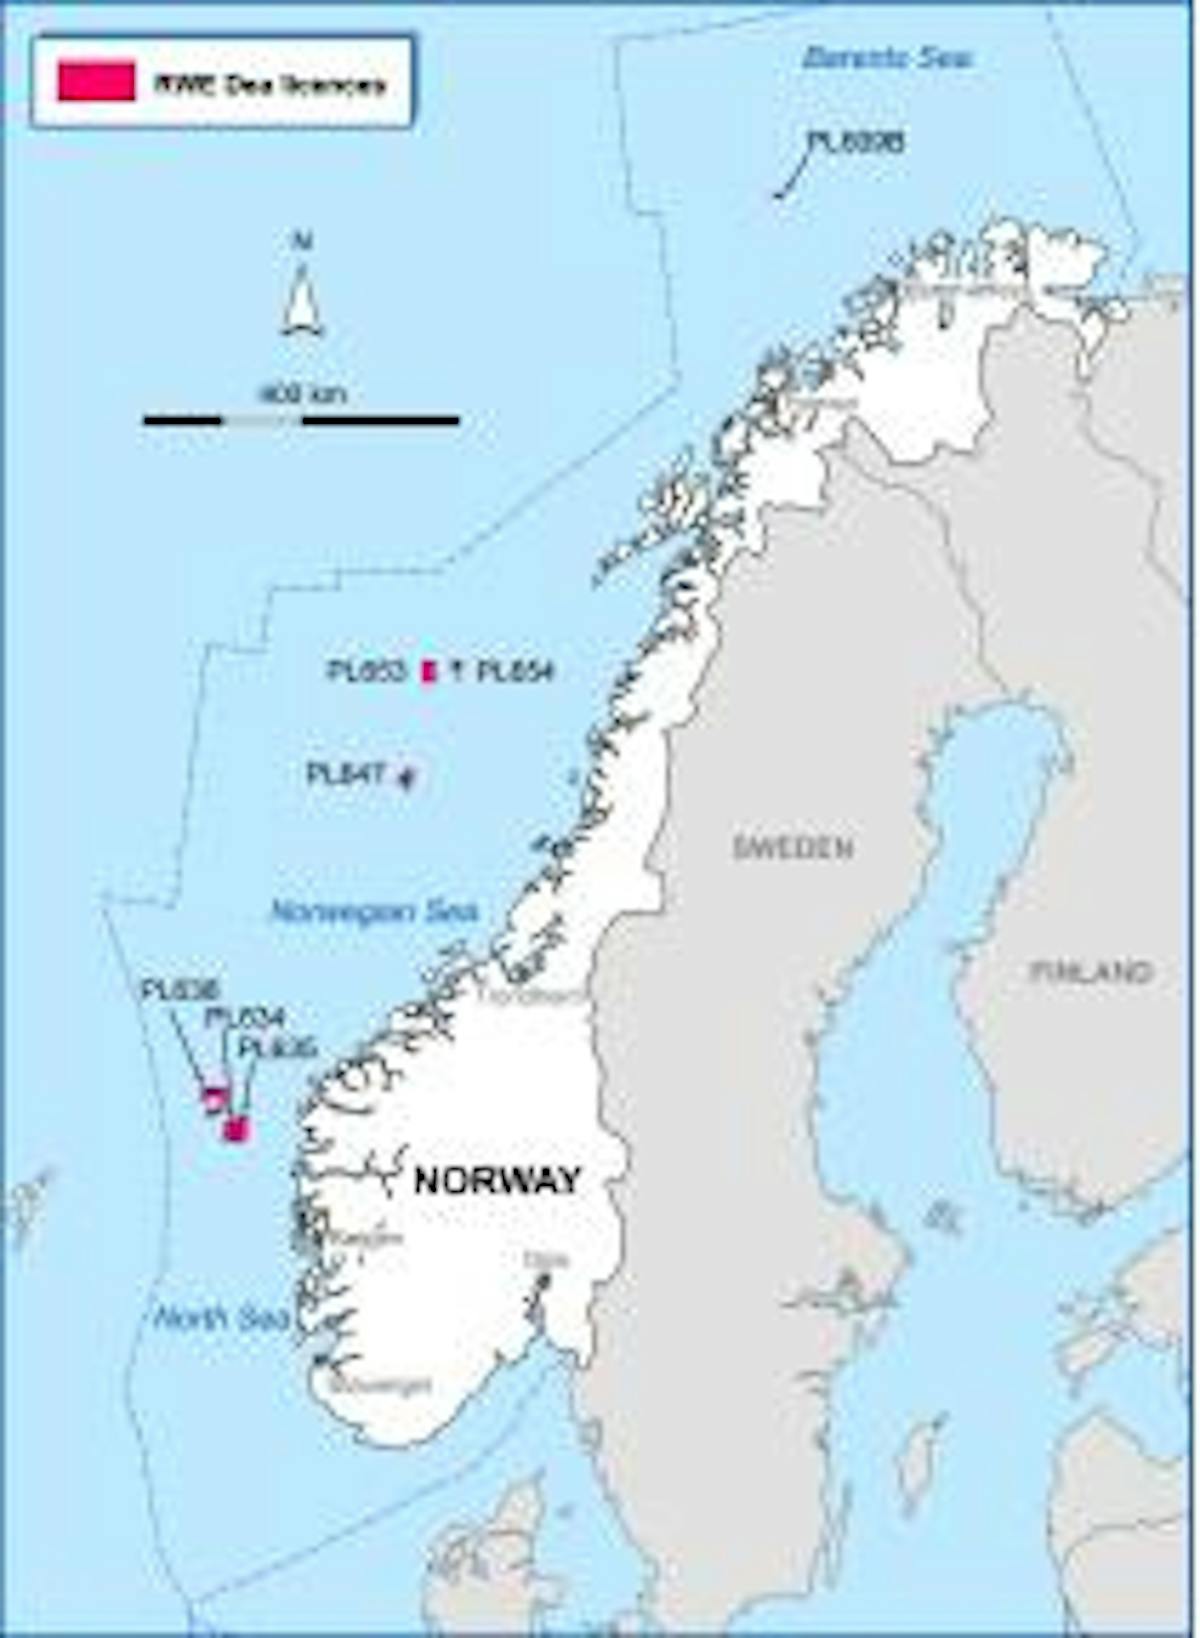 RWE Dea Norge new licenses